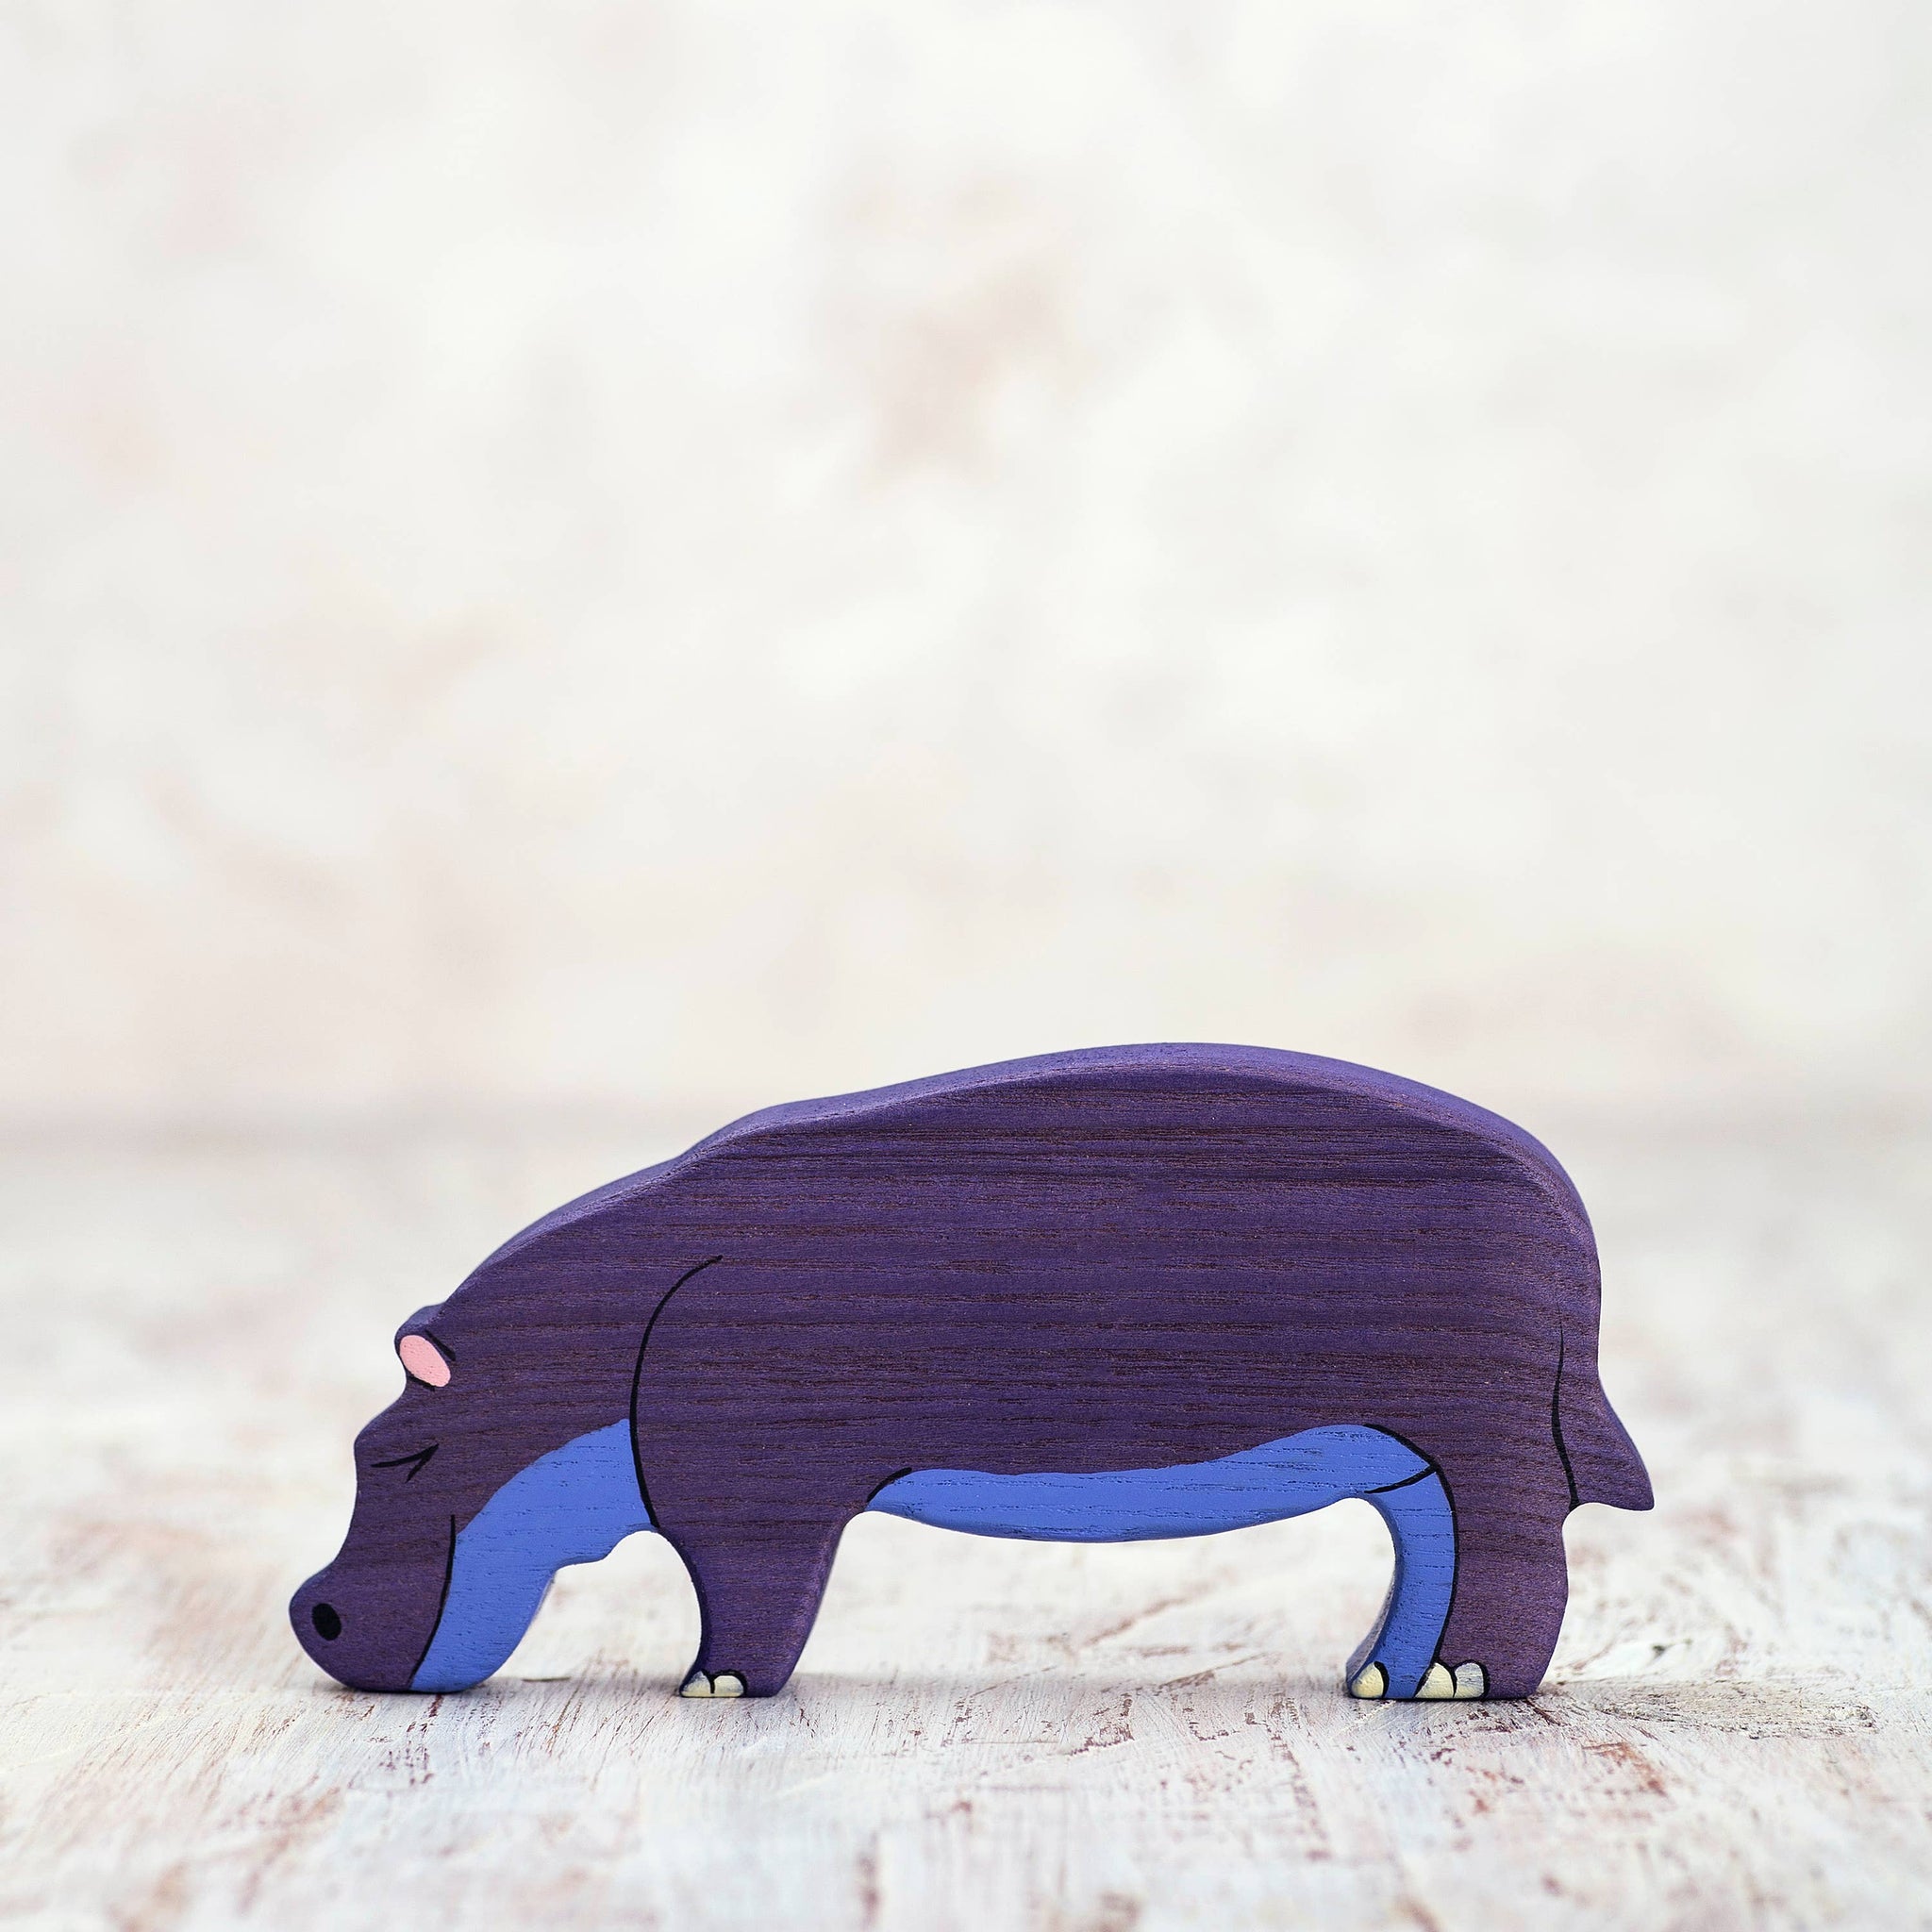 Wooden toy Hippo figurine